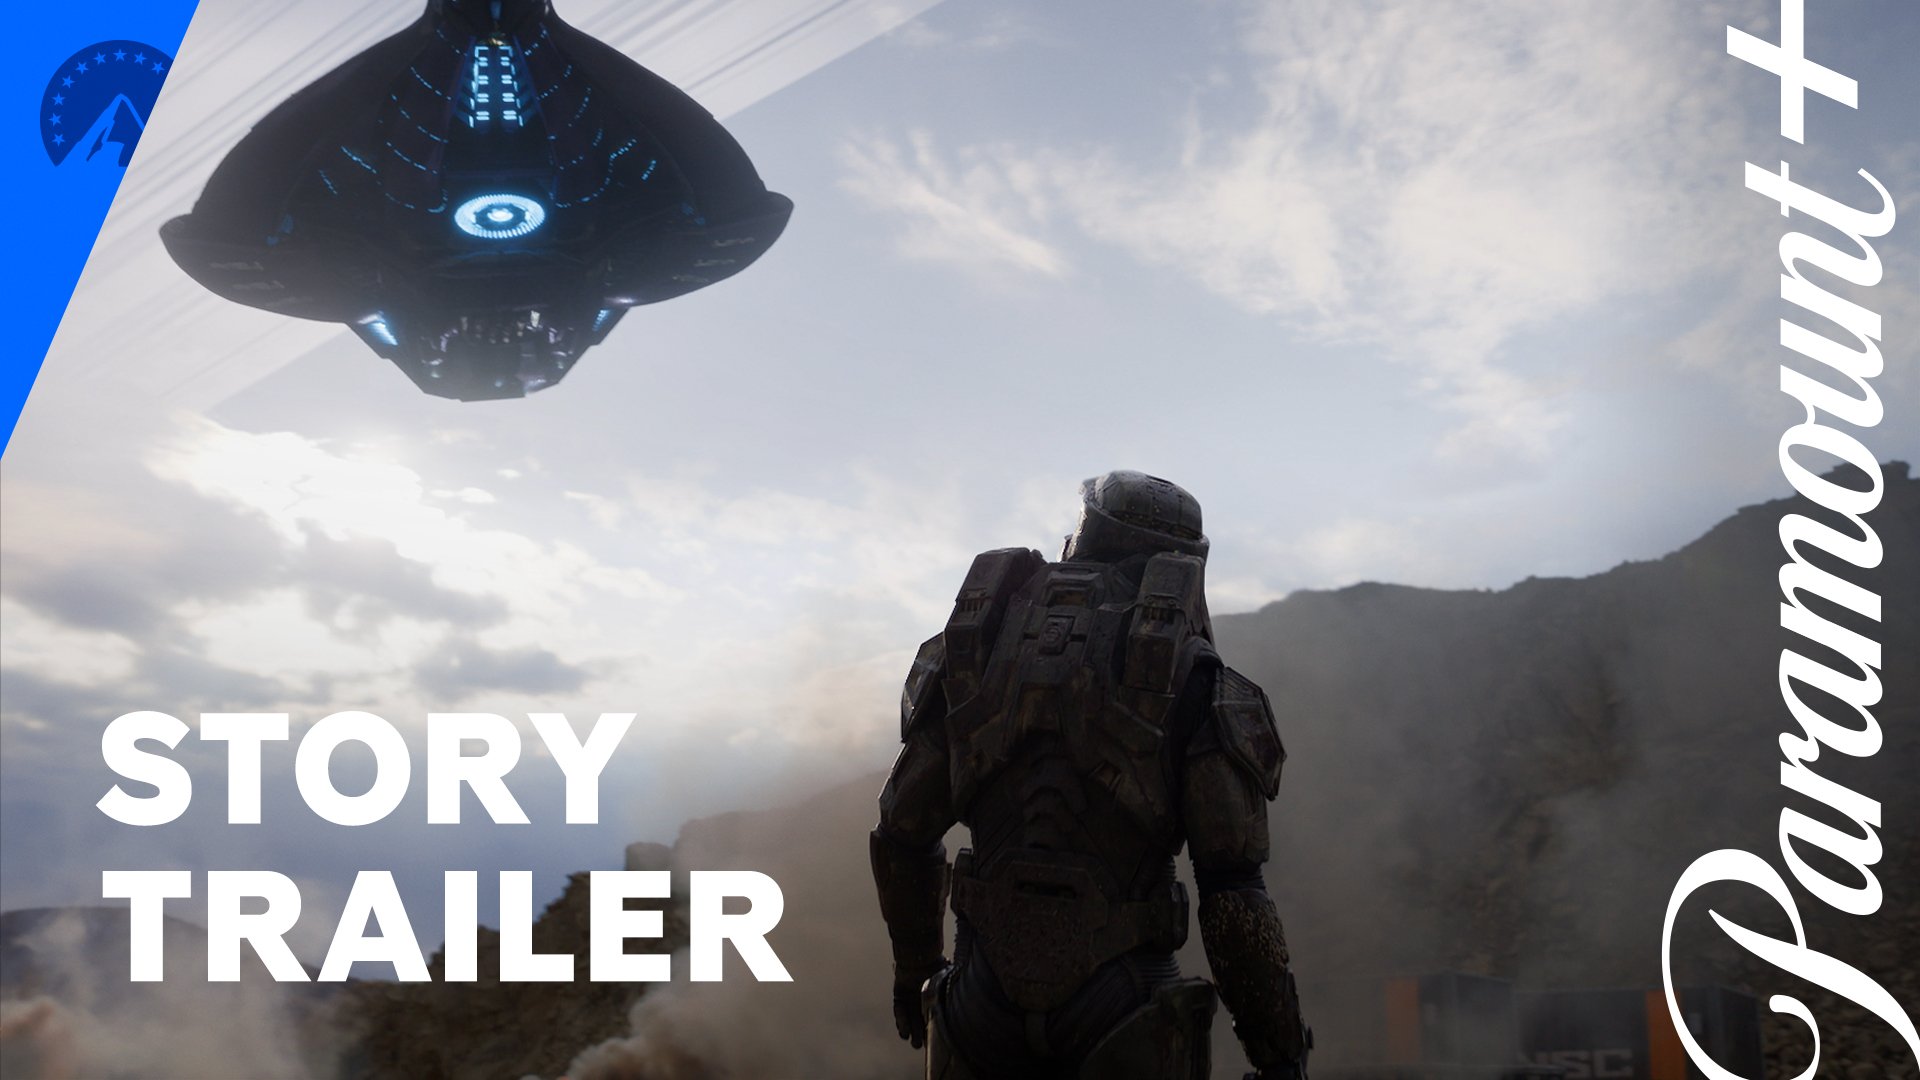 Halo Trailer Hero Image